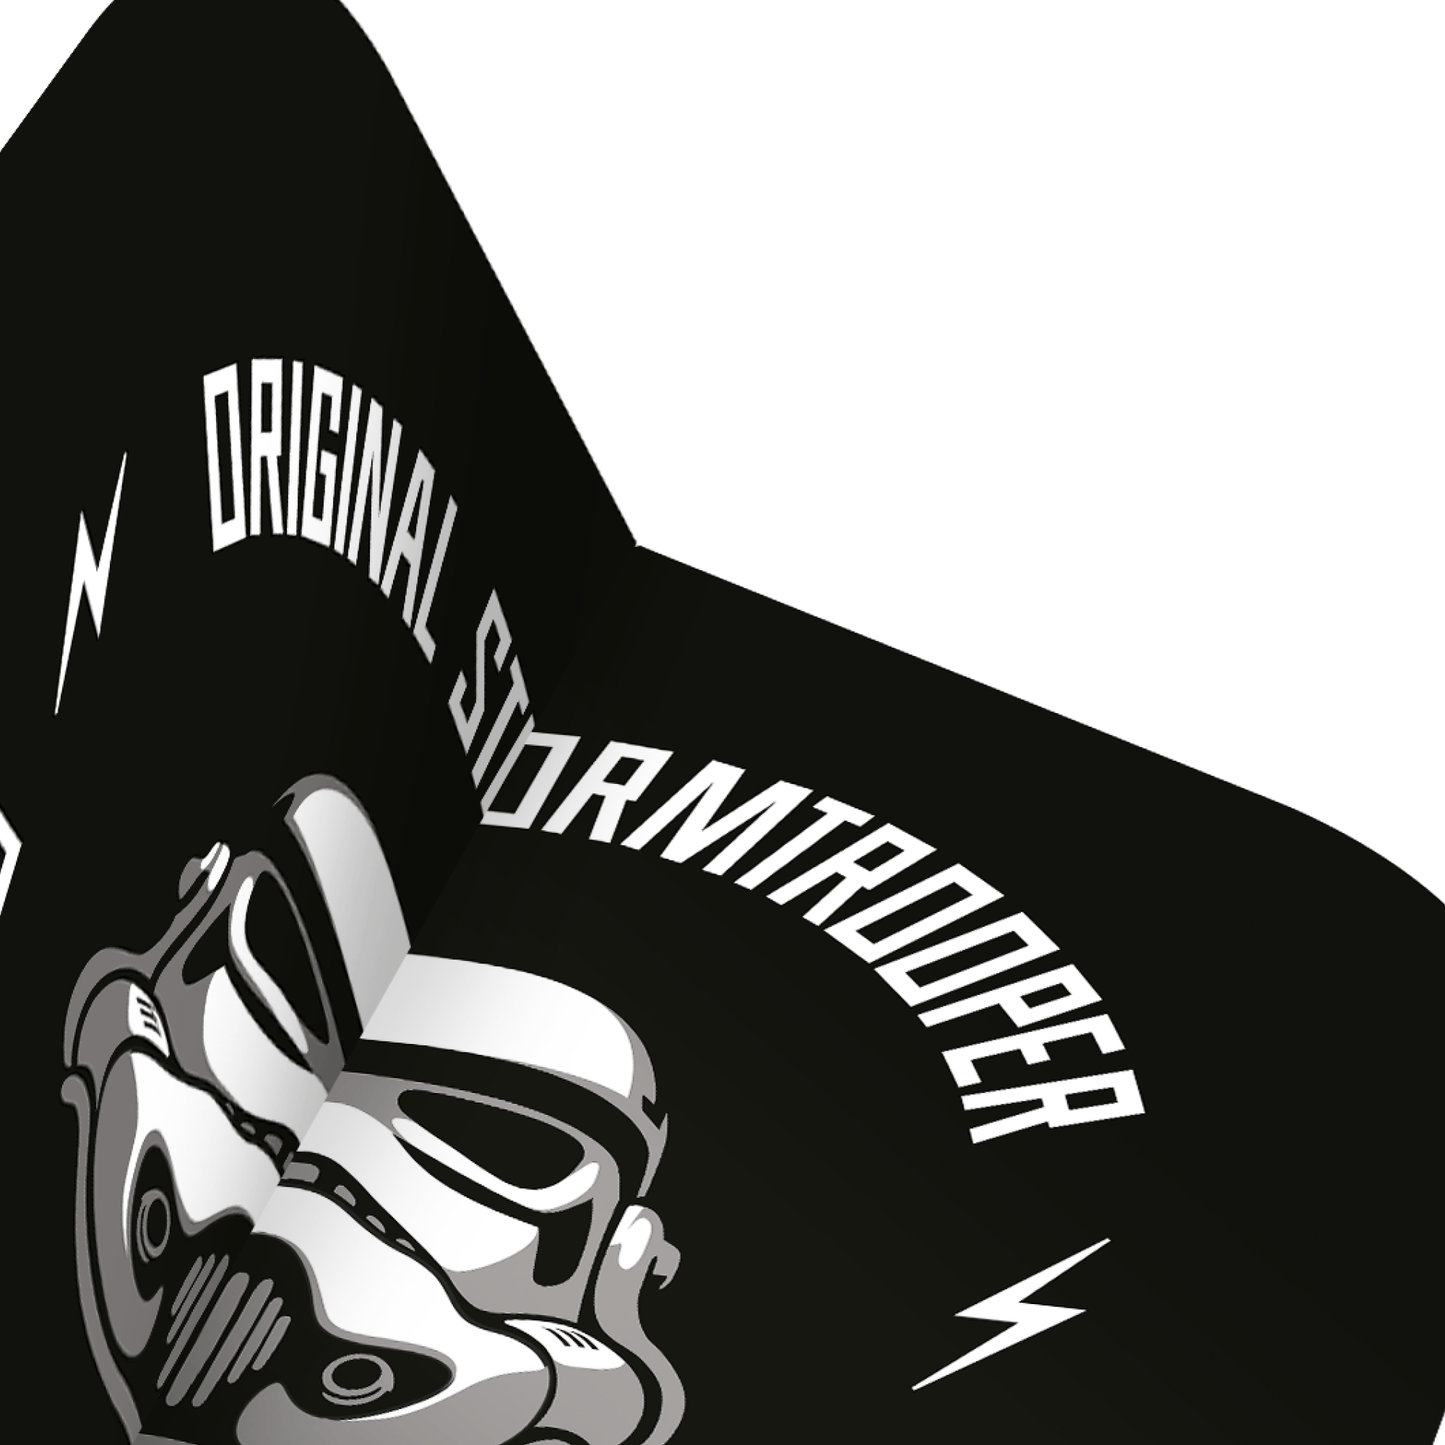 Original StormTrooper Dart Flights - Official Licensed - No2 - Std - Storm Trooper - Logo on Black